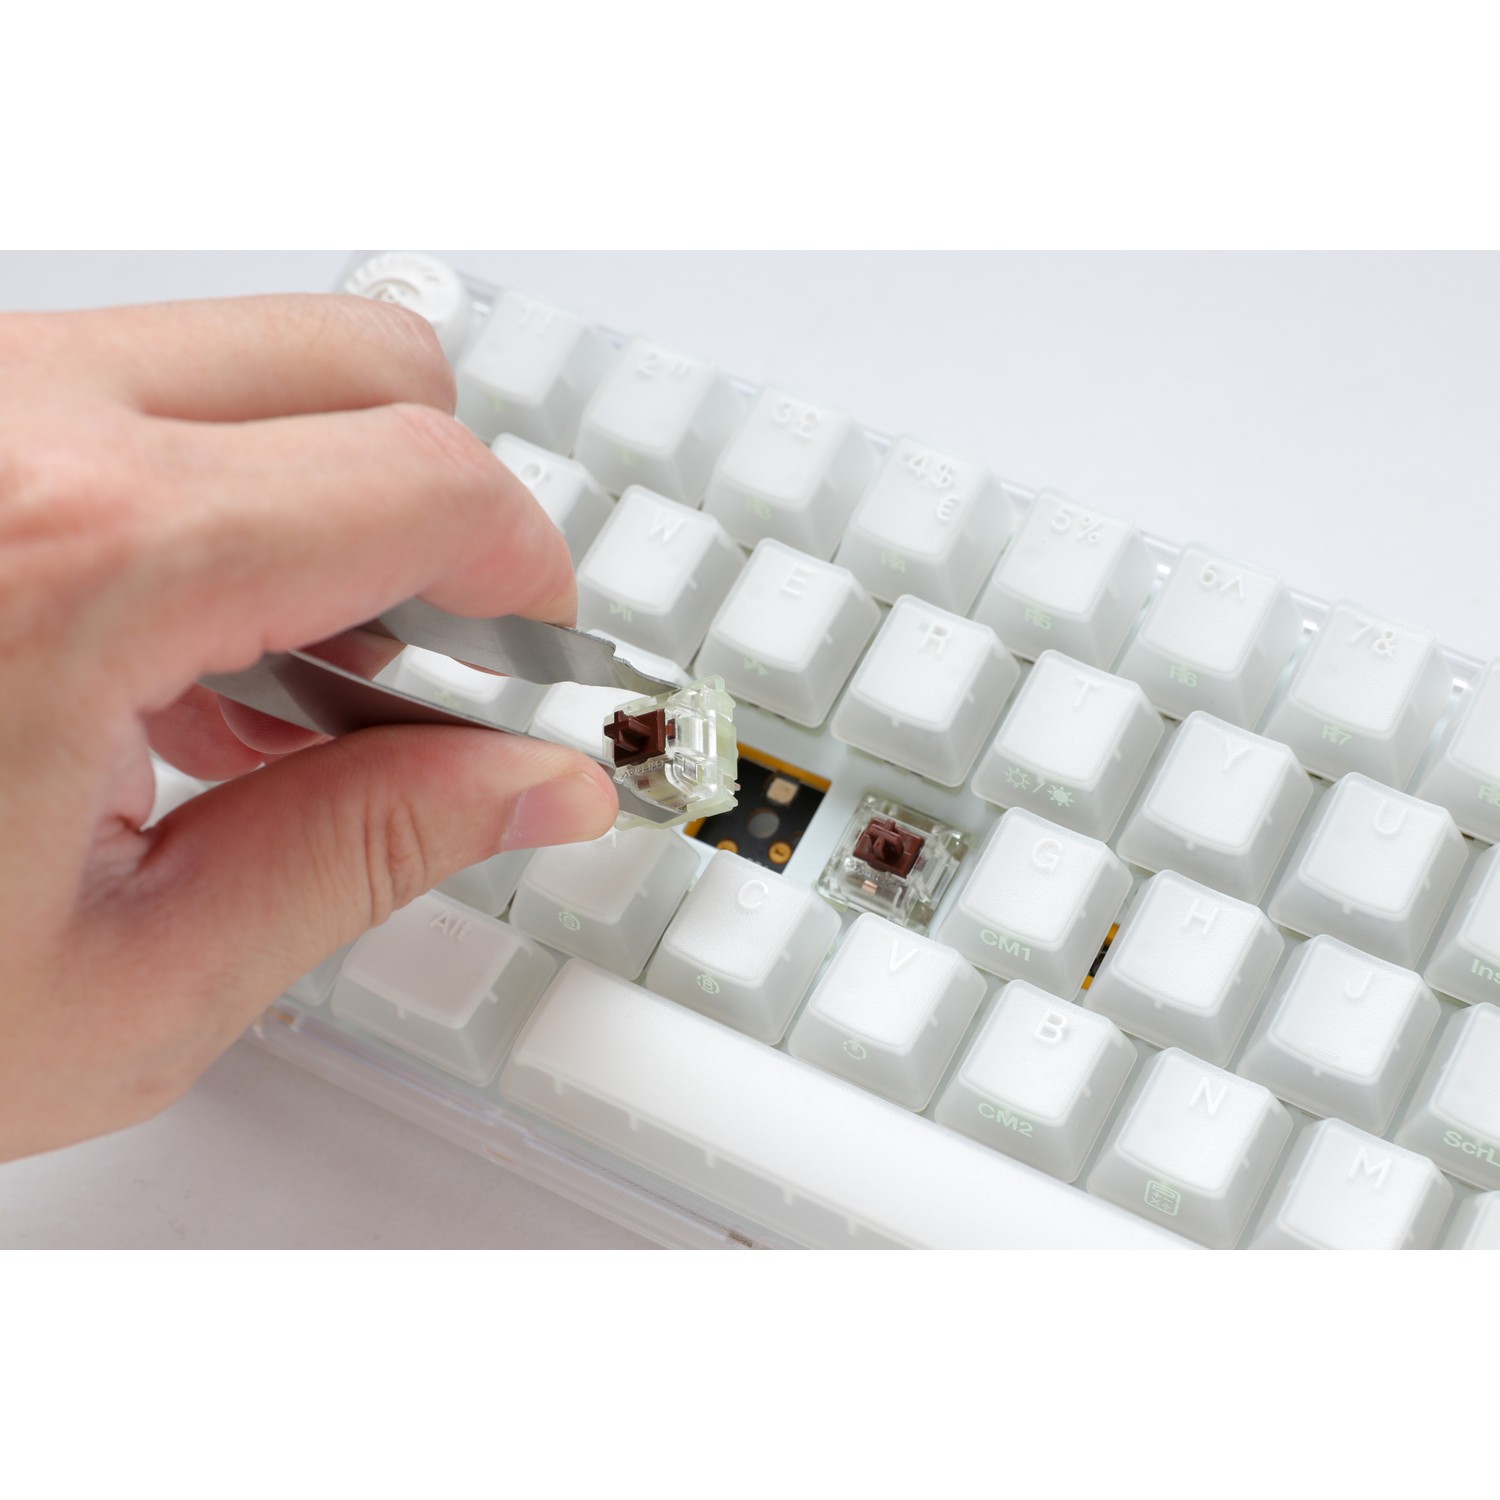 Ducky One 3 Aura Mini 60% Mechanical Gaming Keyboard White Frame UK Layout Cherry Brown Switch